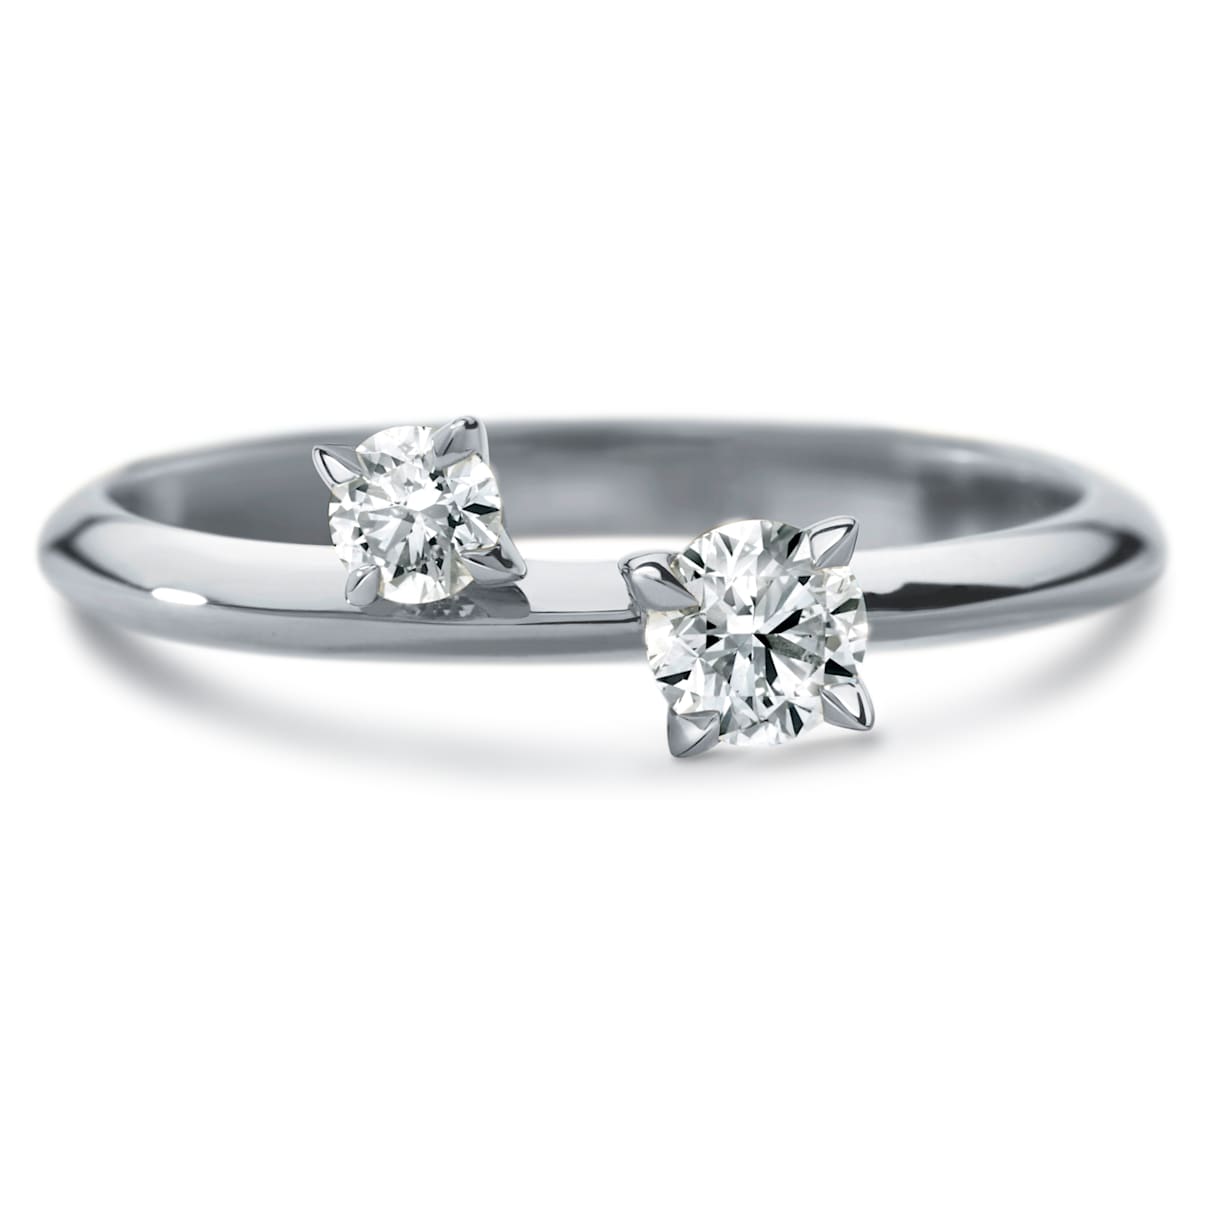 Intimate Delicate Ring, Swarovski Created Diamonds, 18K White Gold, Size 55